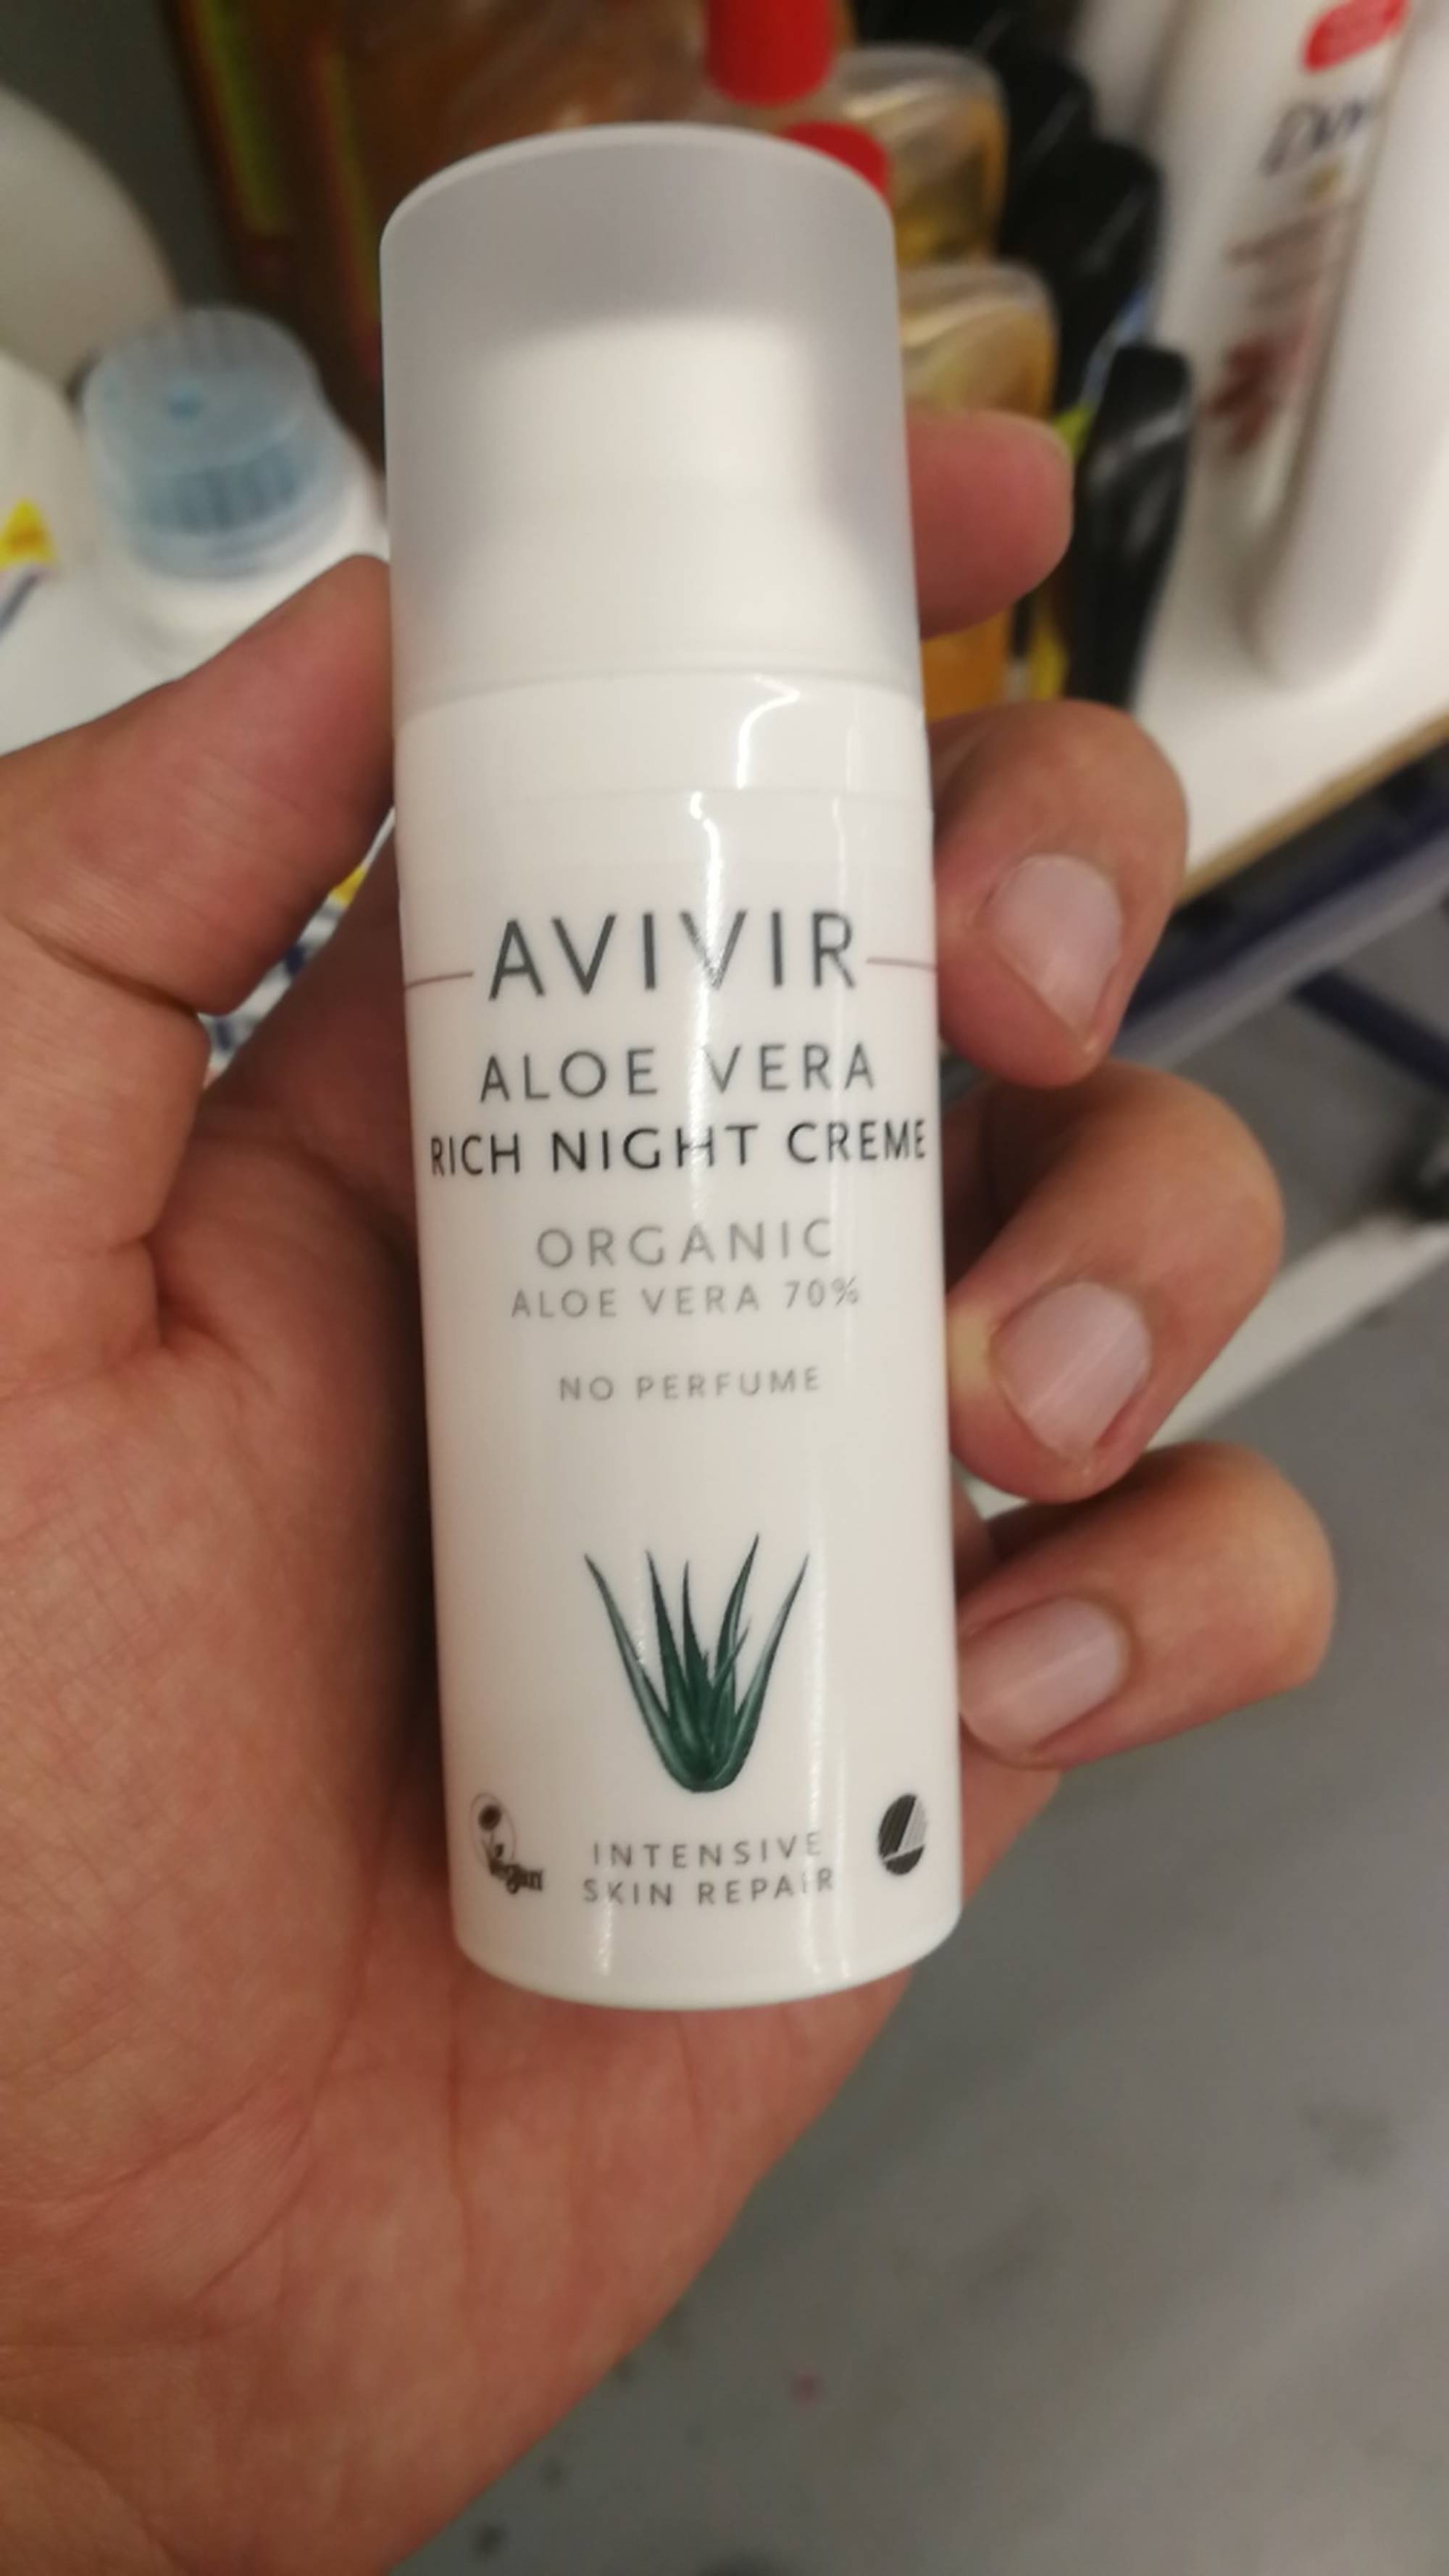 AVIVIR - Aloe vera rich night creme